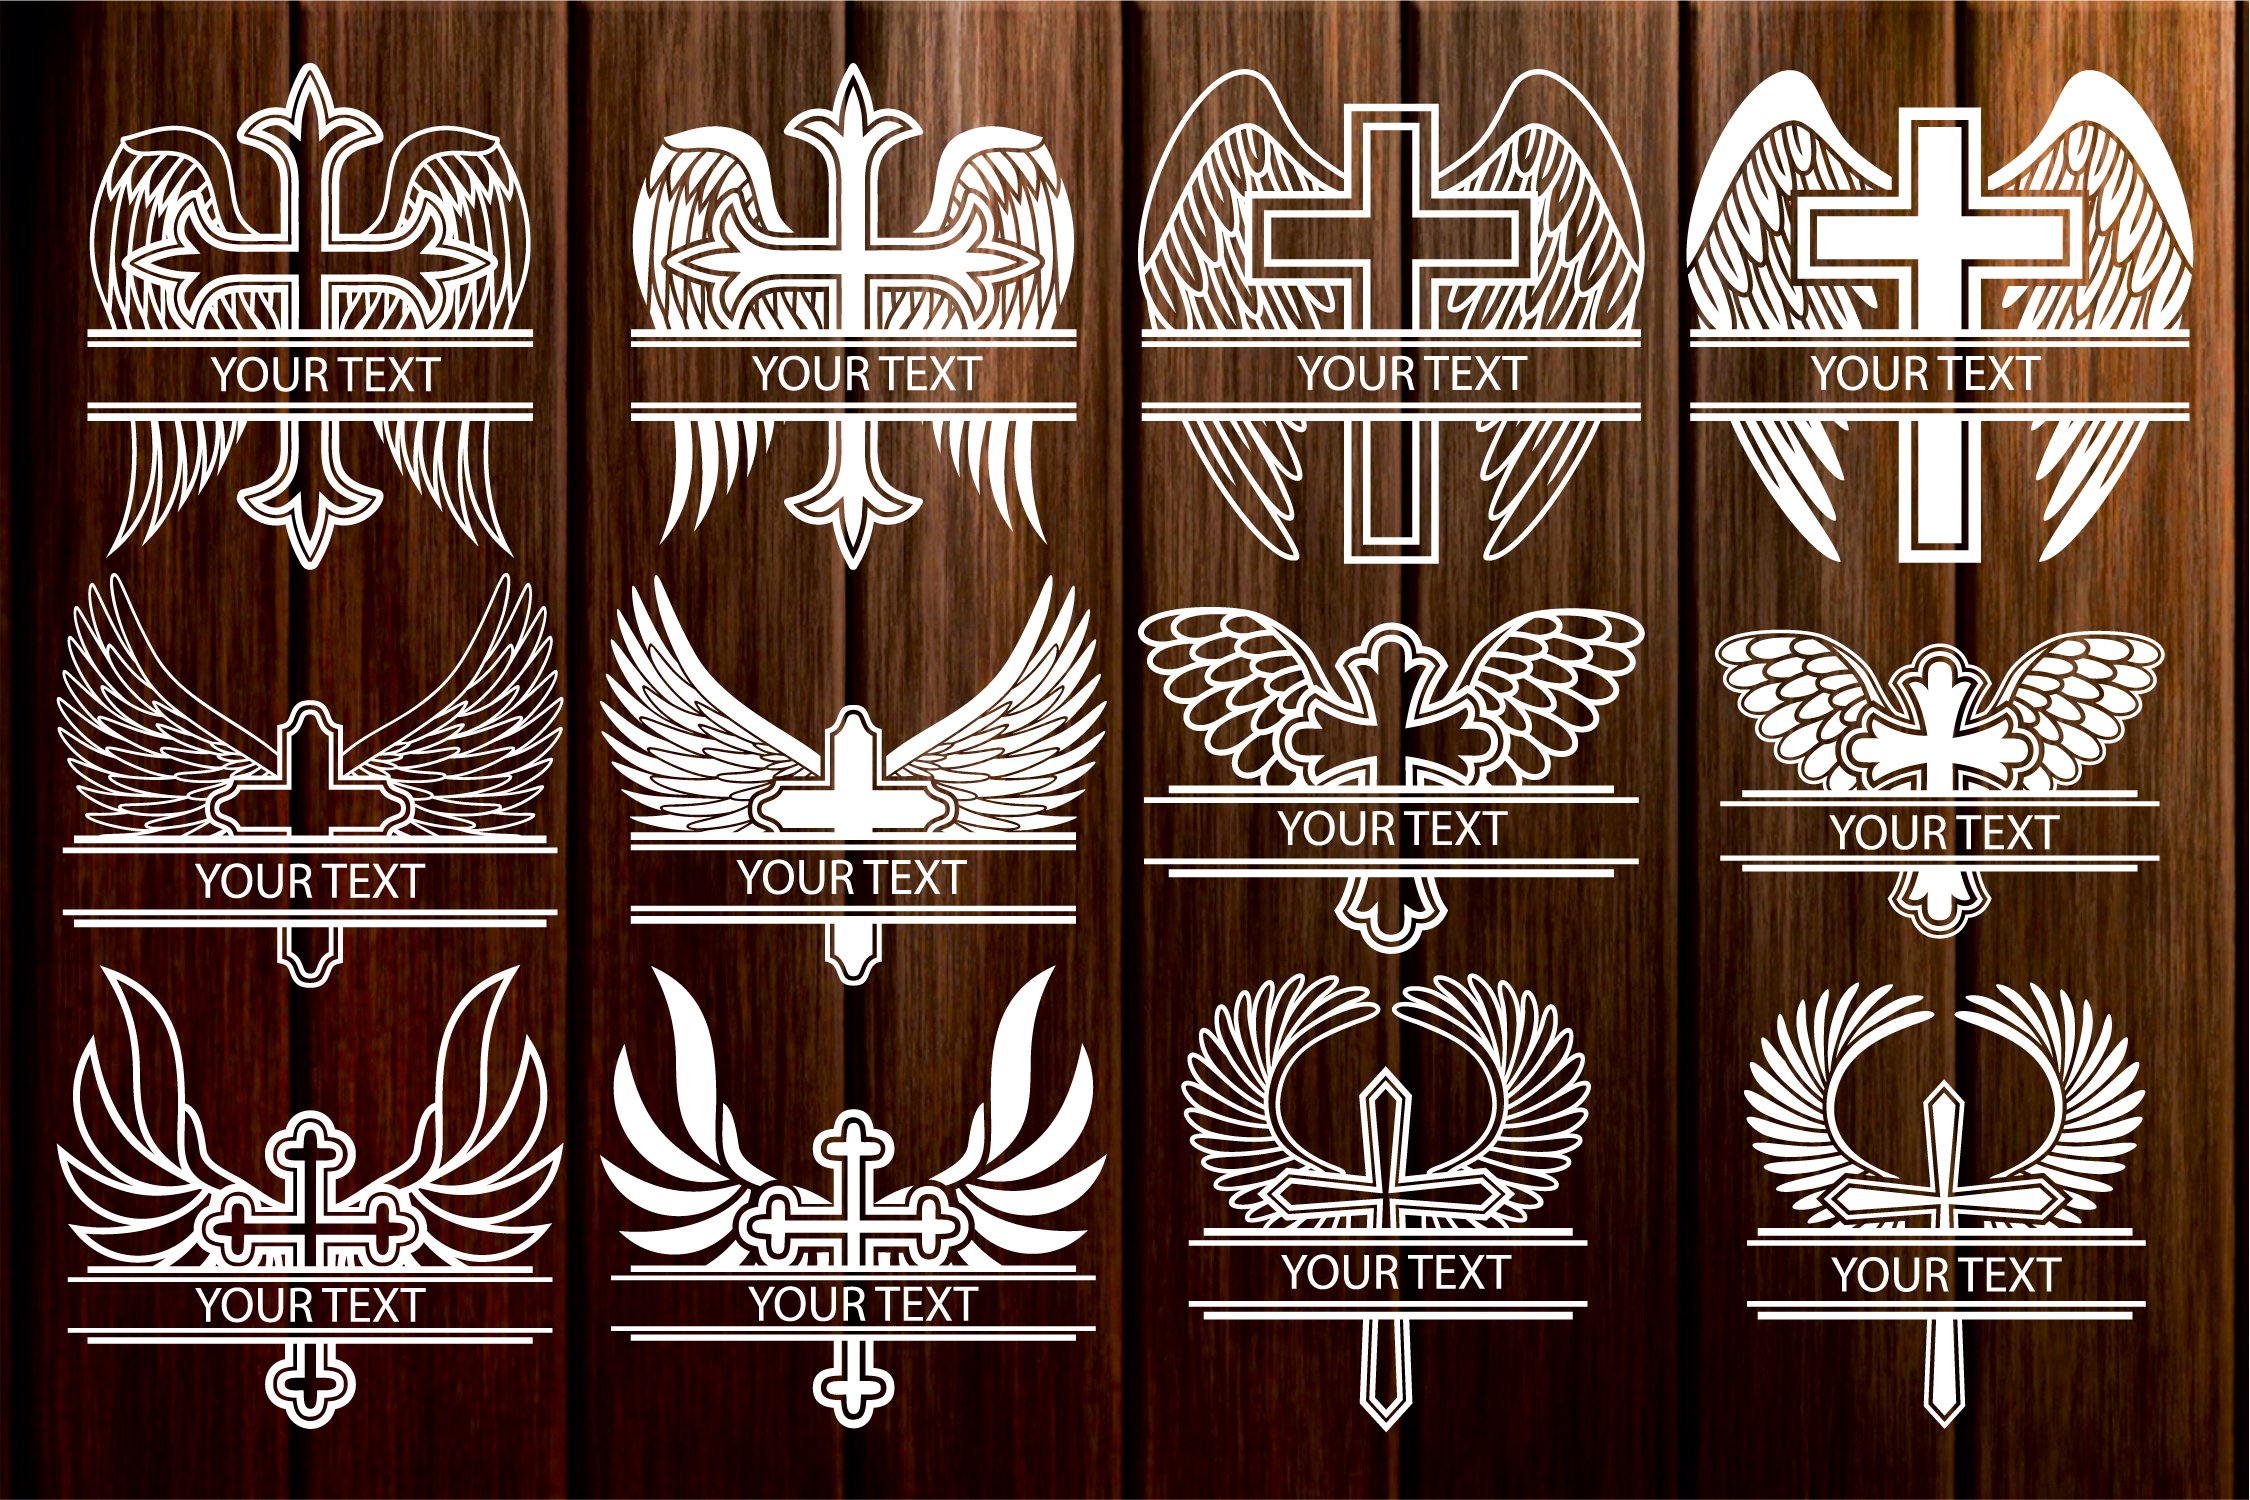 Angel wings and crosses on prints.